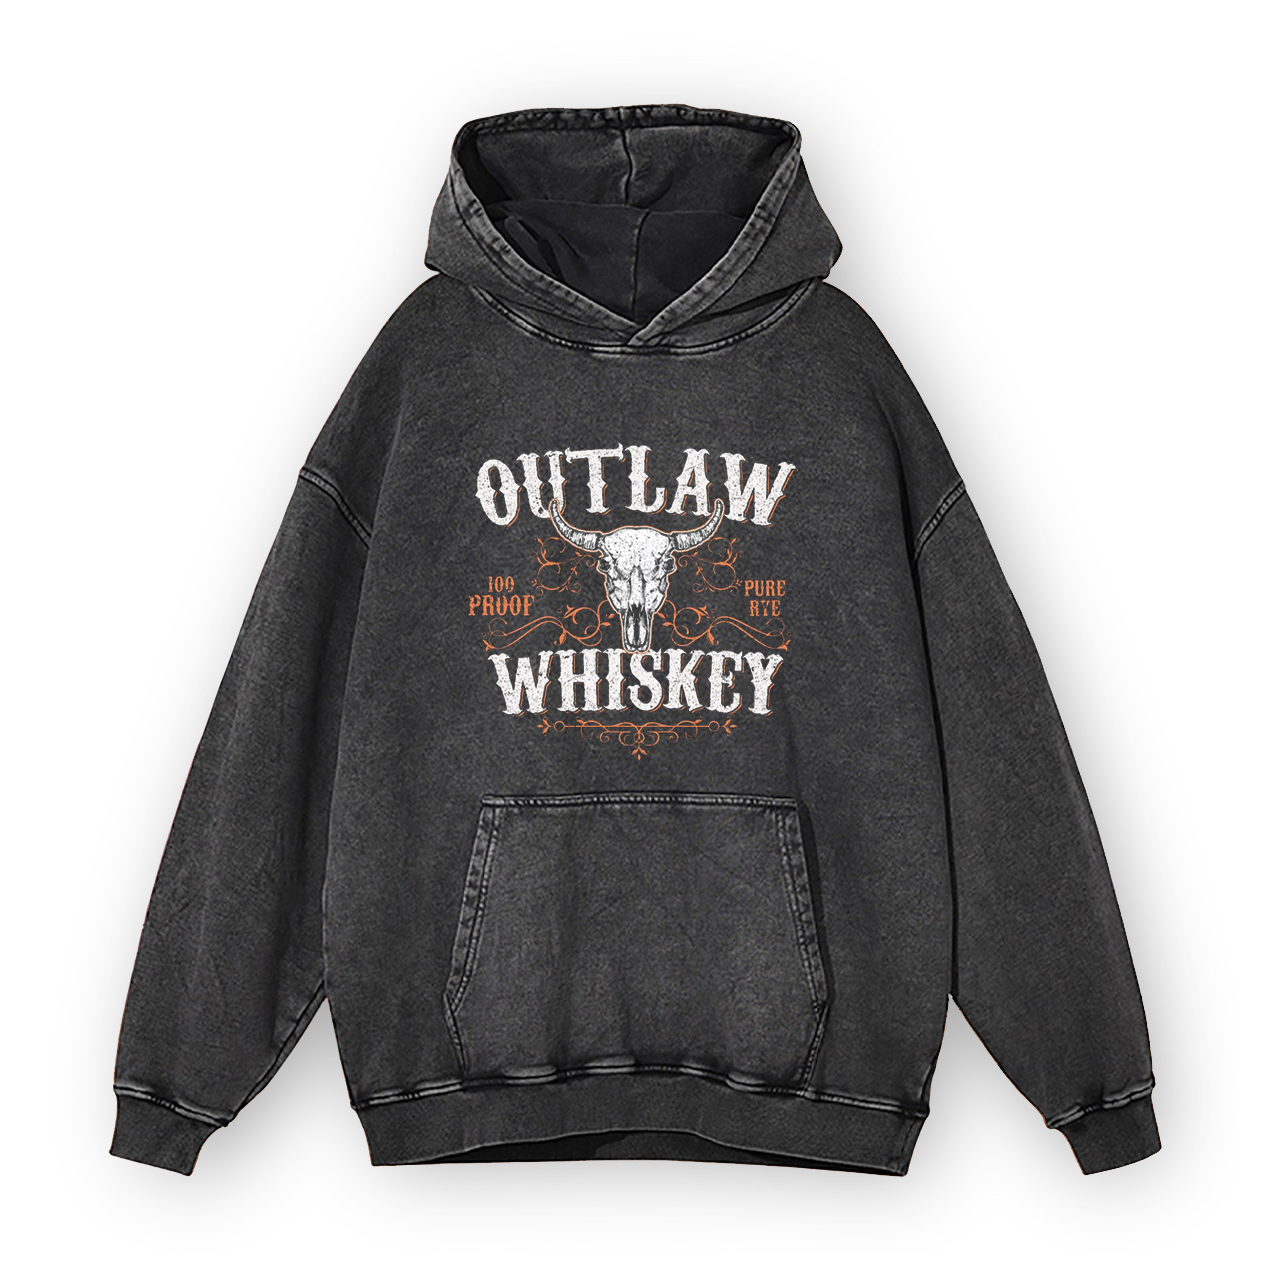 Outlaw Whiskey Garment-Dye Hoodies